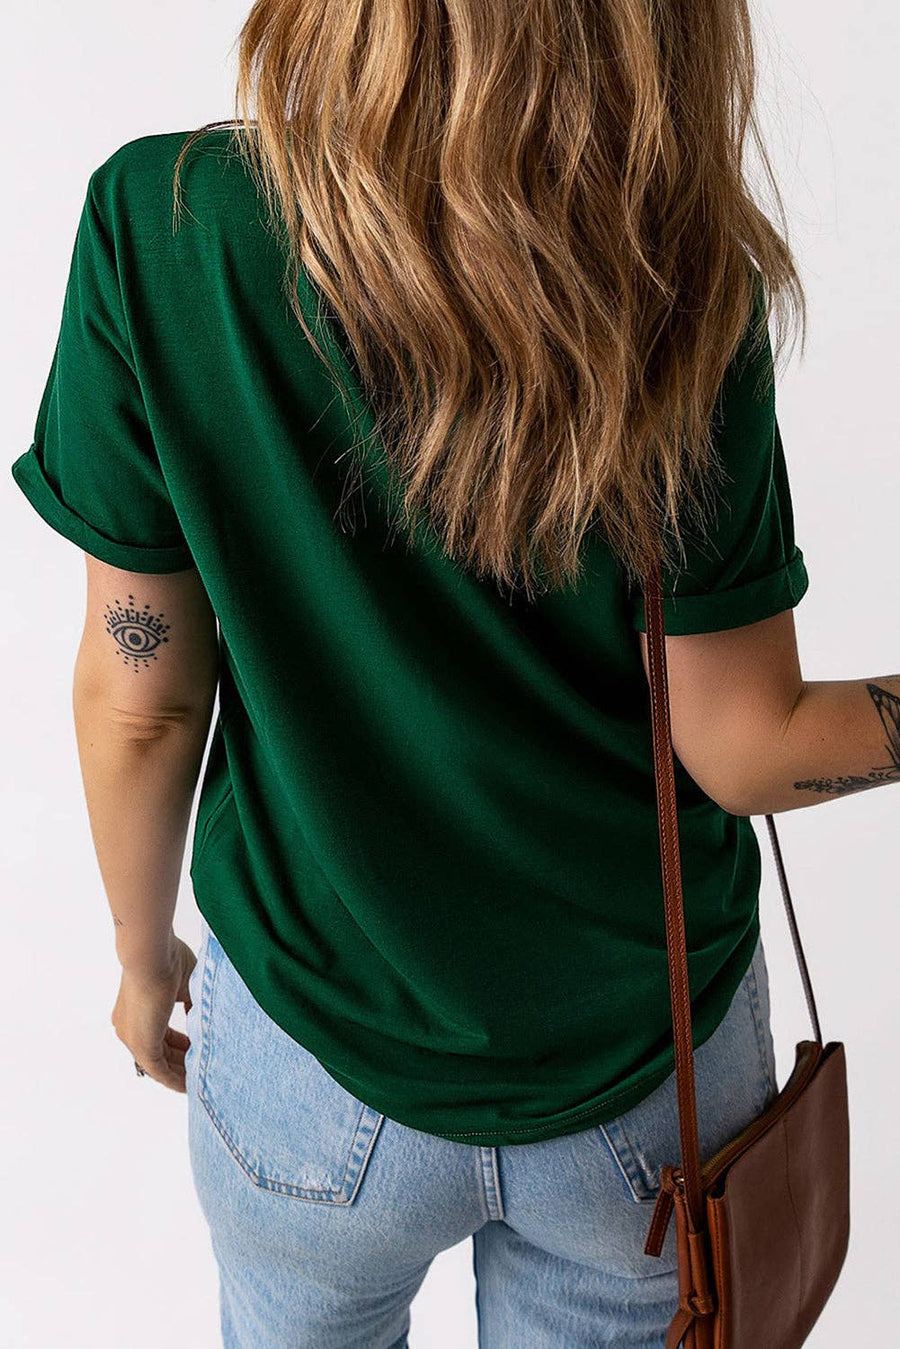 Lovesoft - Green Lets Day Drink Clover Print Round Neck T Shirt: Green / L / 62%Polyester+32%Cotton+6%Elastane